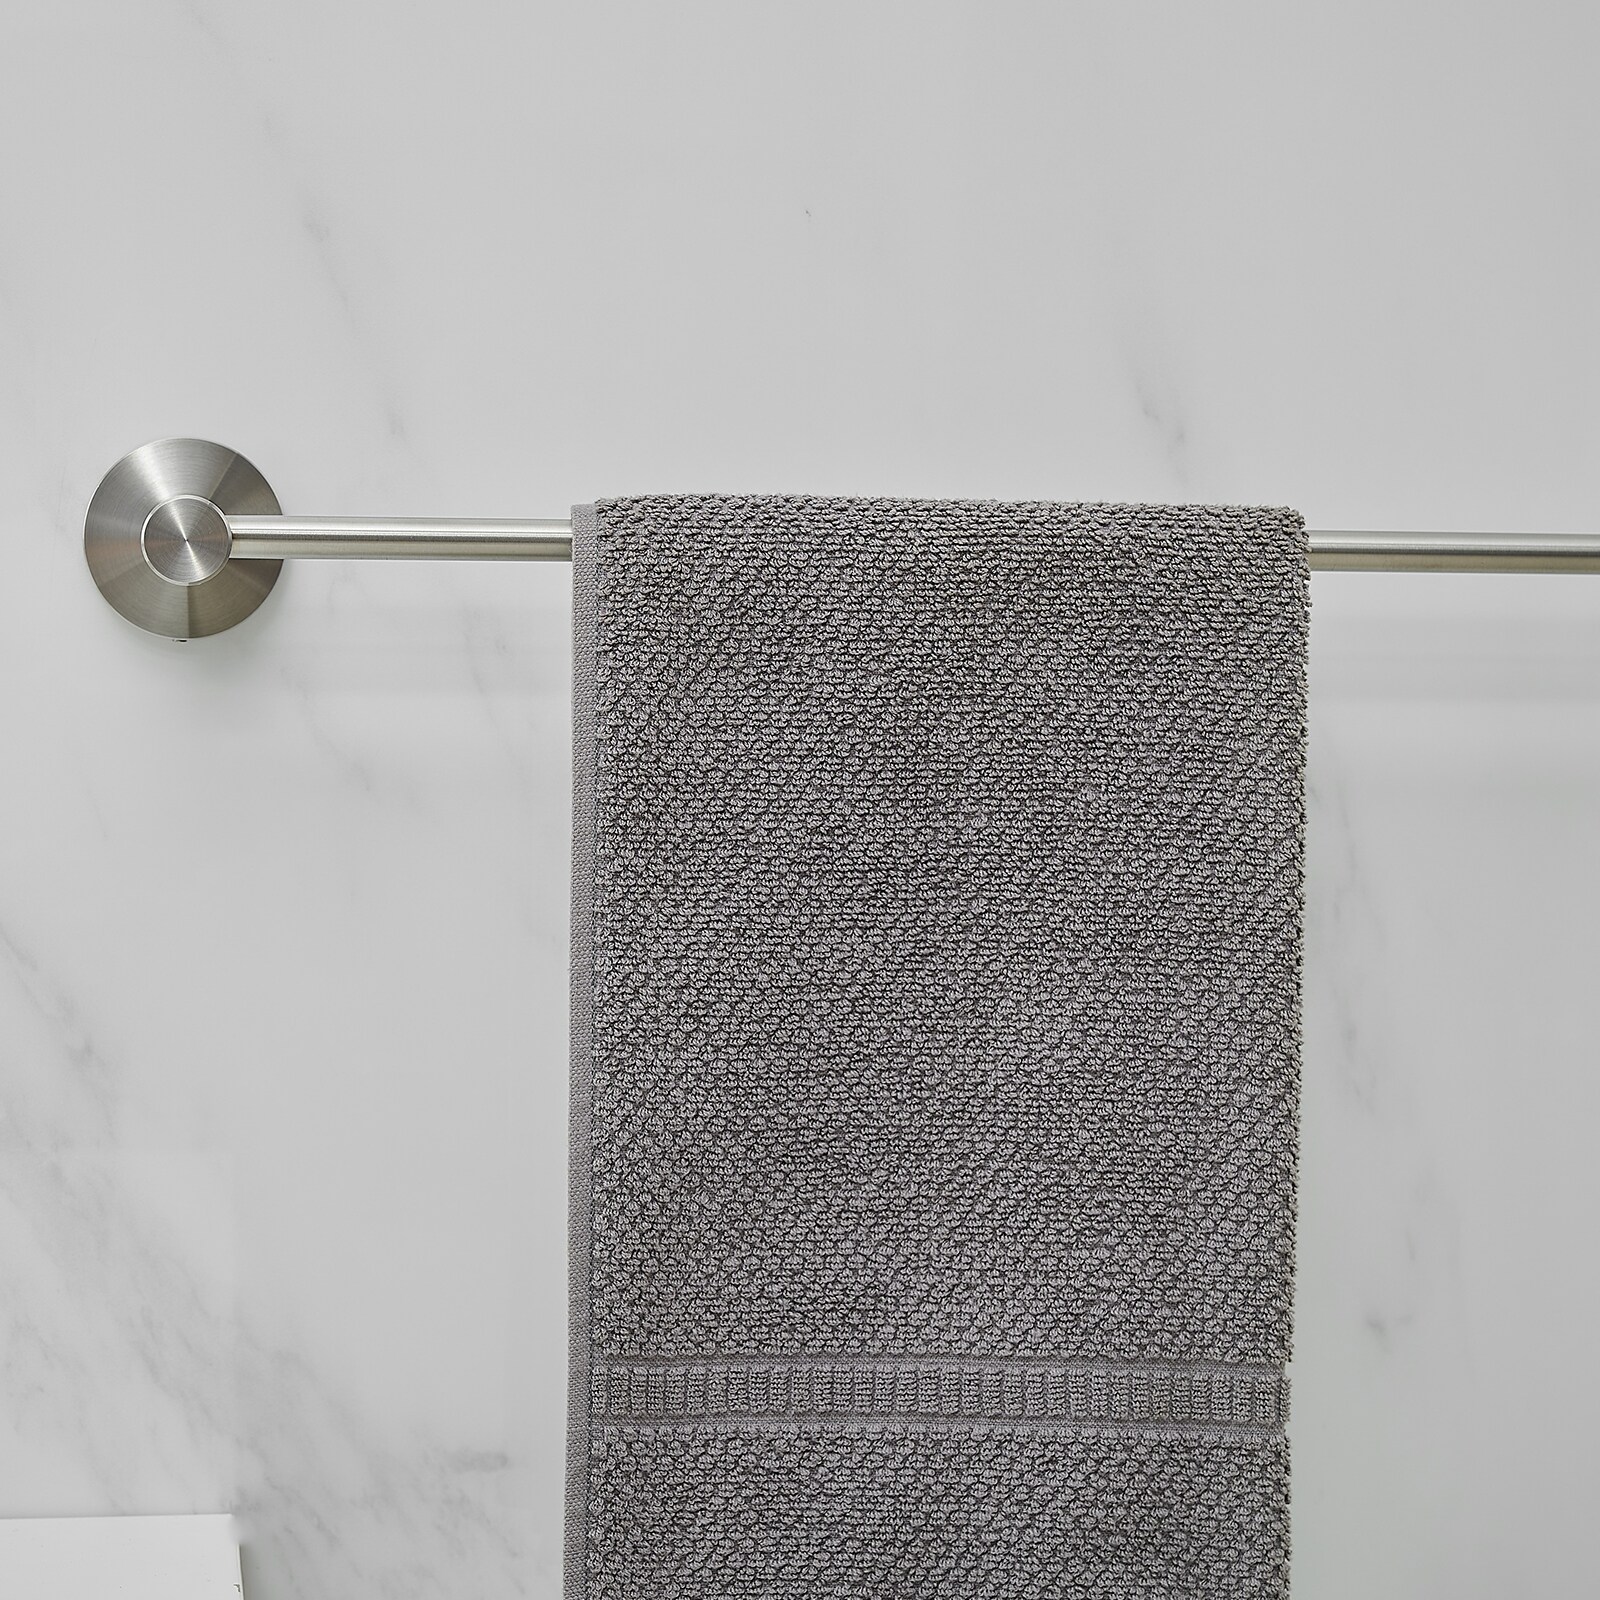 BWE 5-Piece Bath Hardware with Towel Bar Towel Hook Toilet Paper